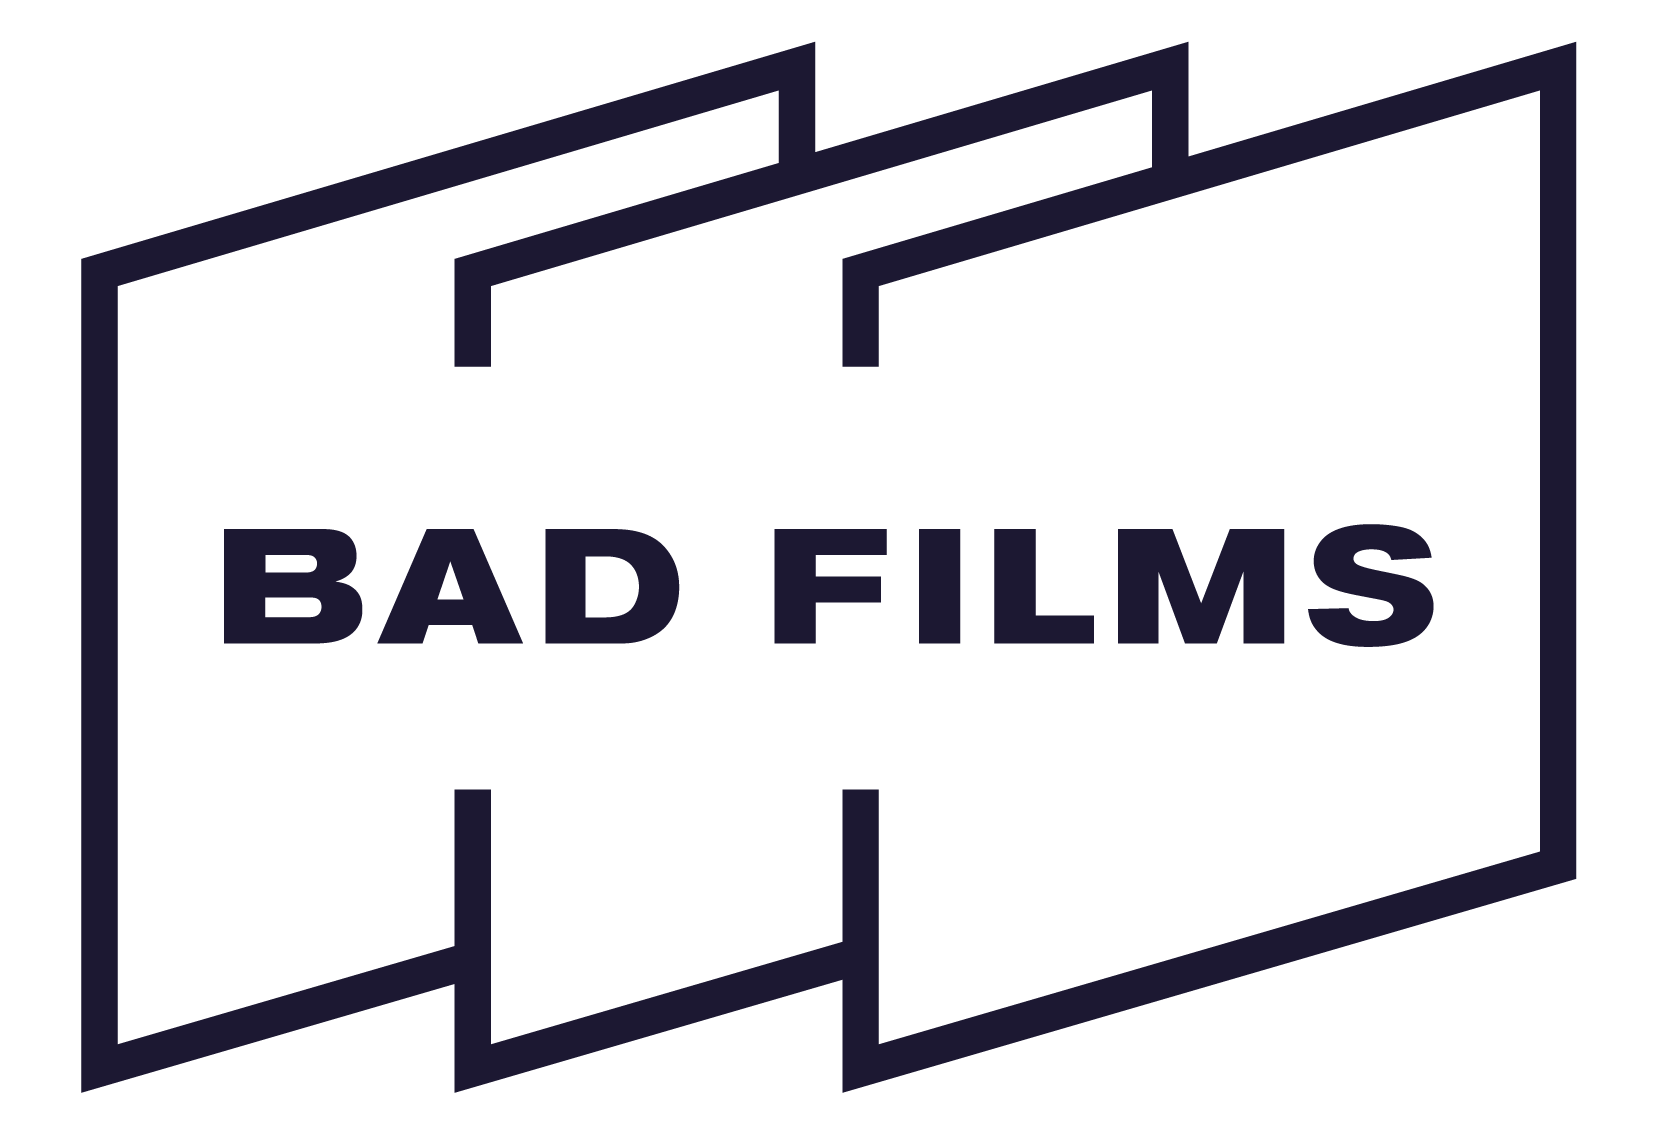 BADFILMS